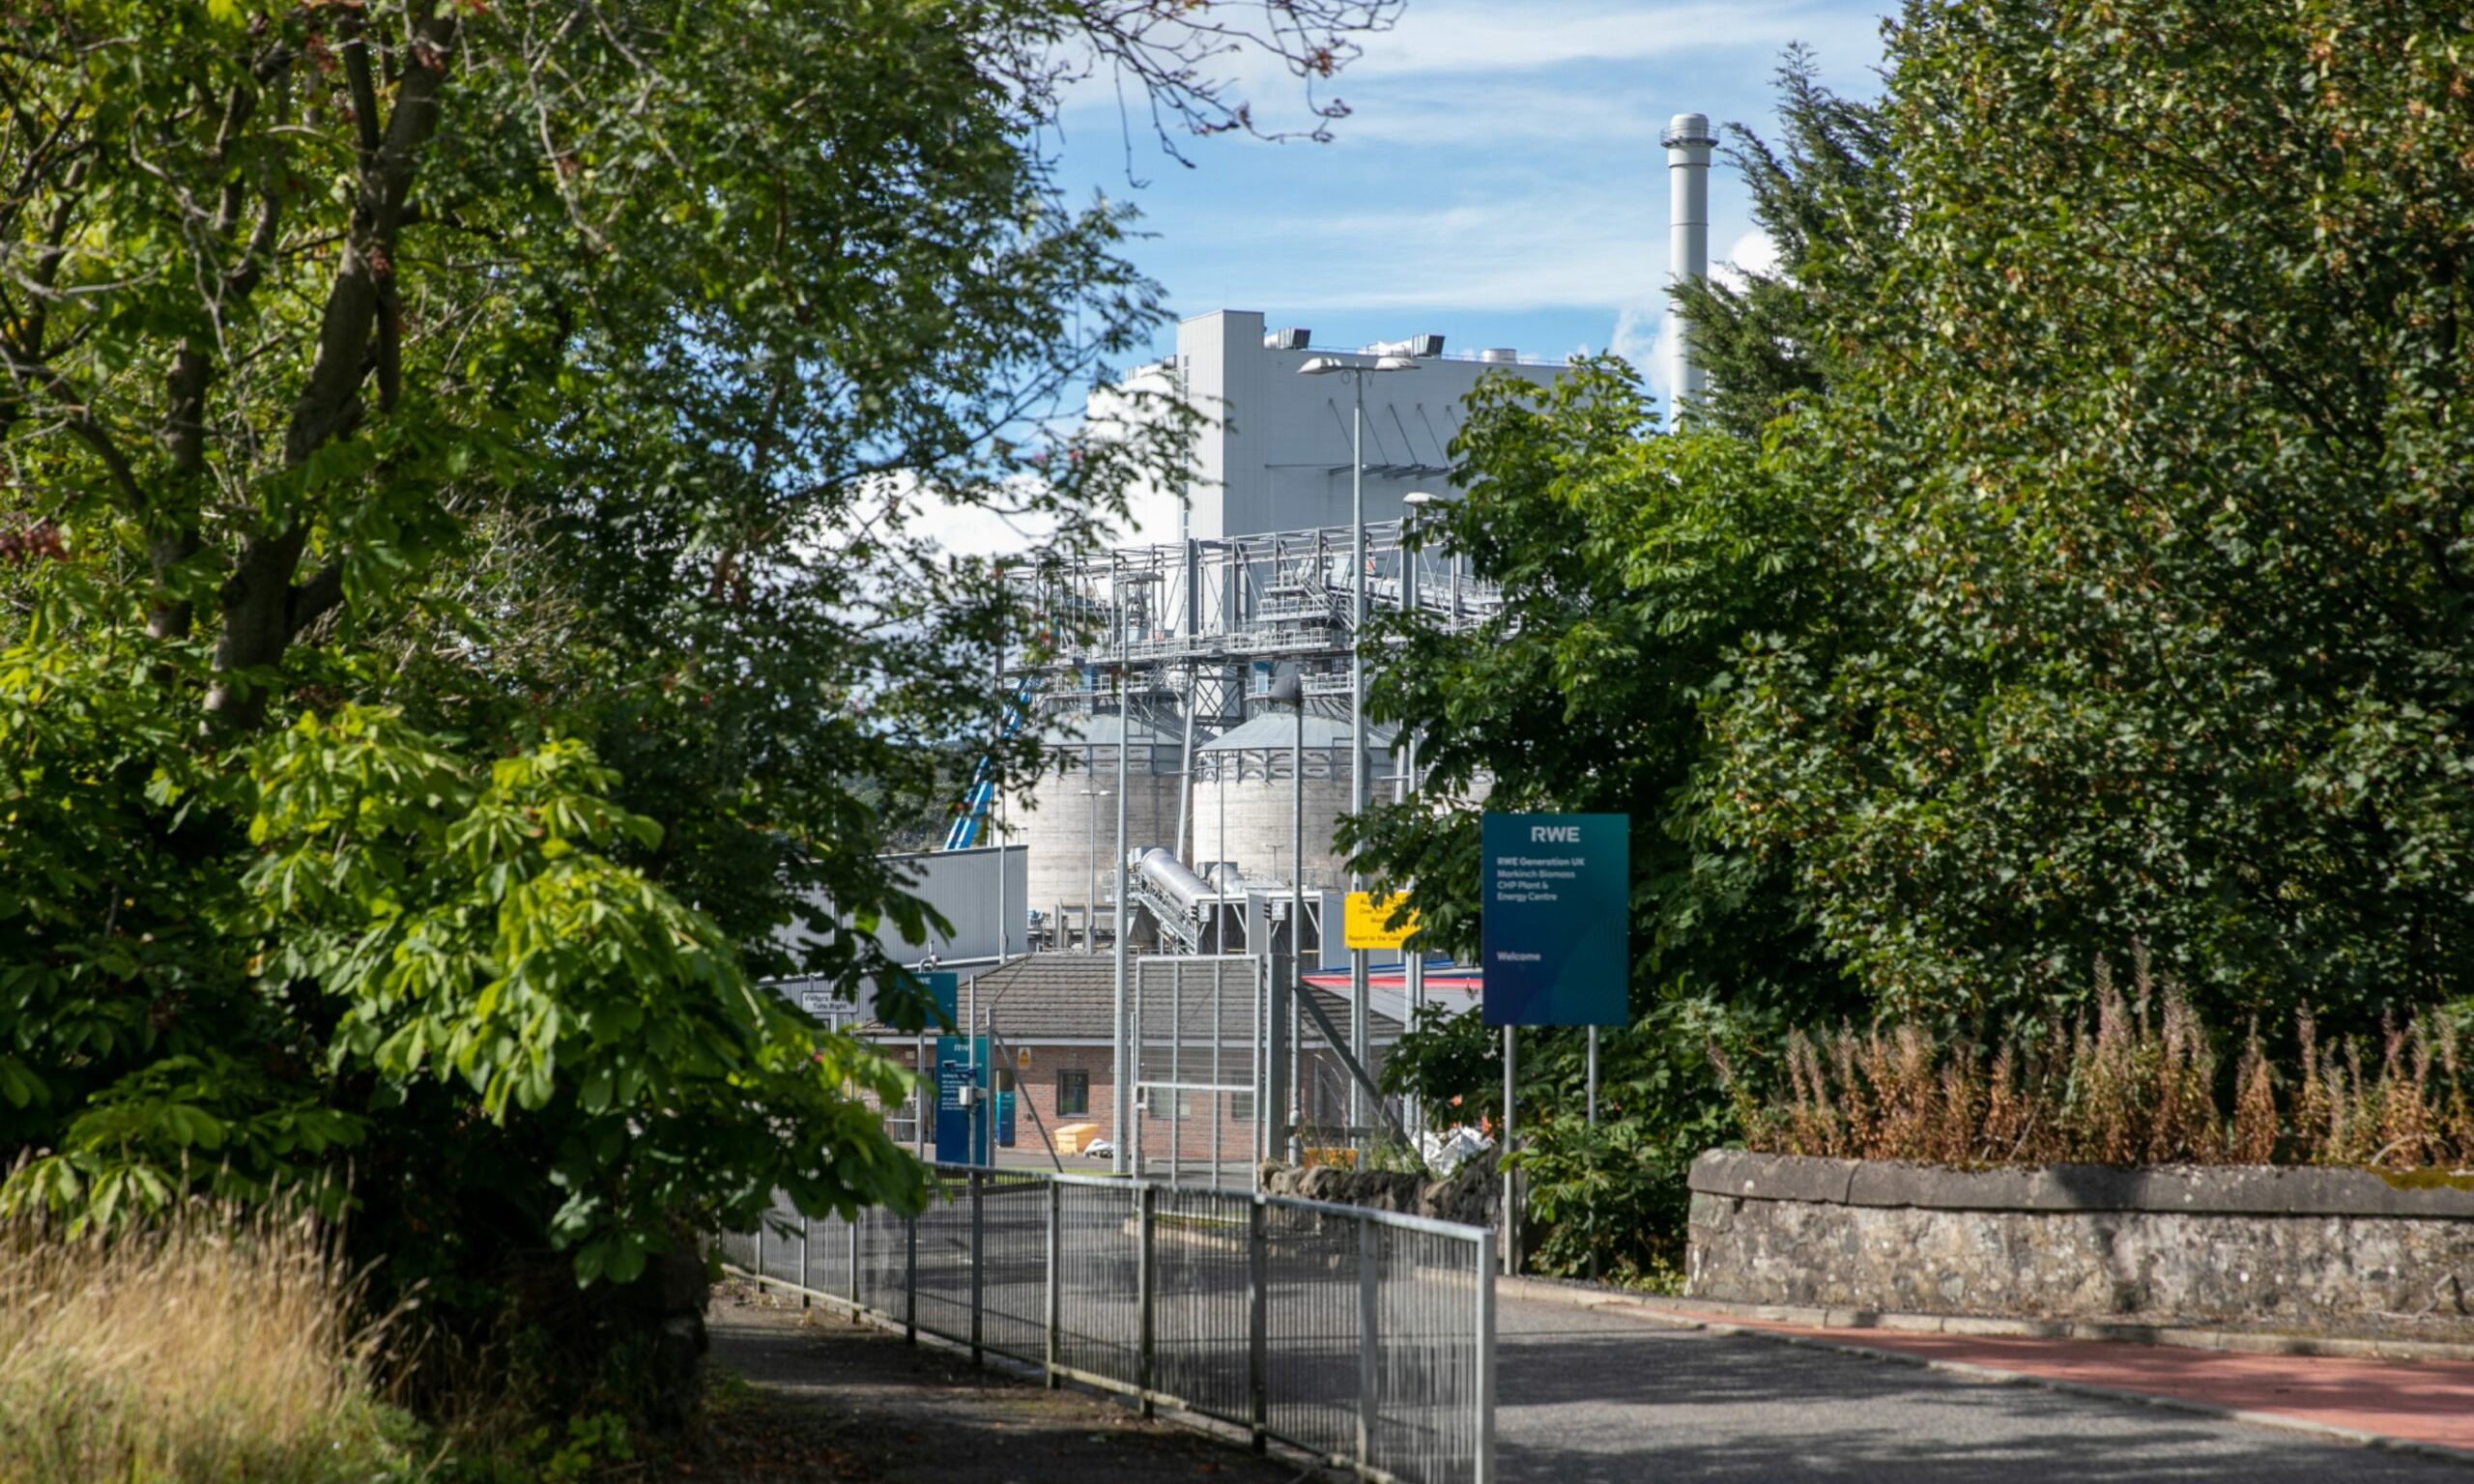 The Markinch biomass plant. Kim Cessford / DCT Media.